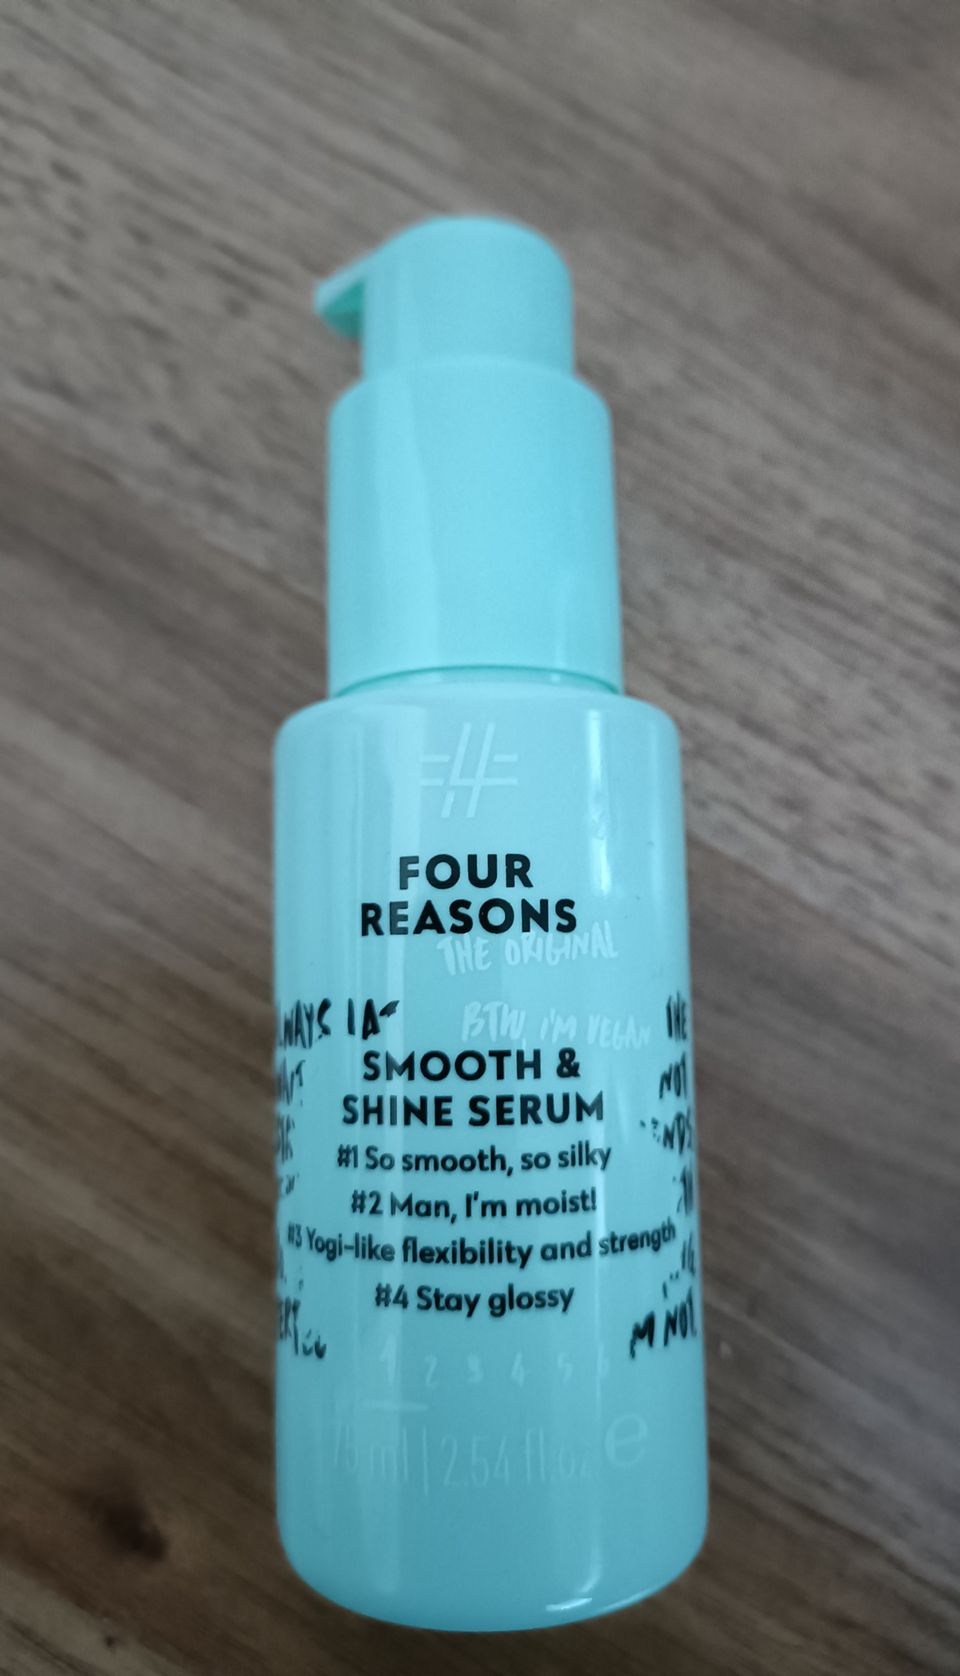 Four Reasons Smooth and shine serum UUSI